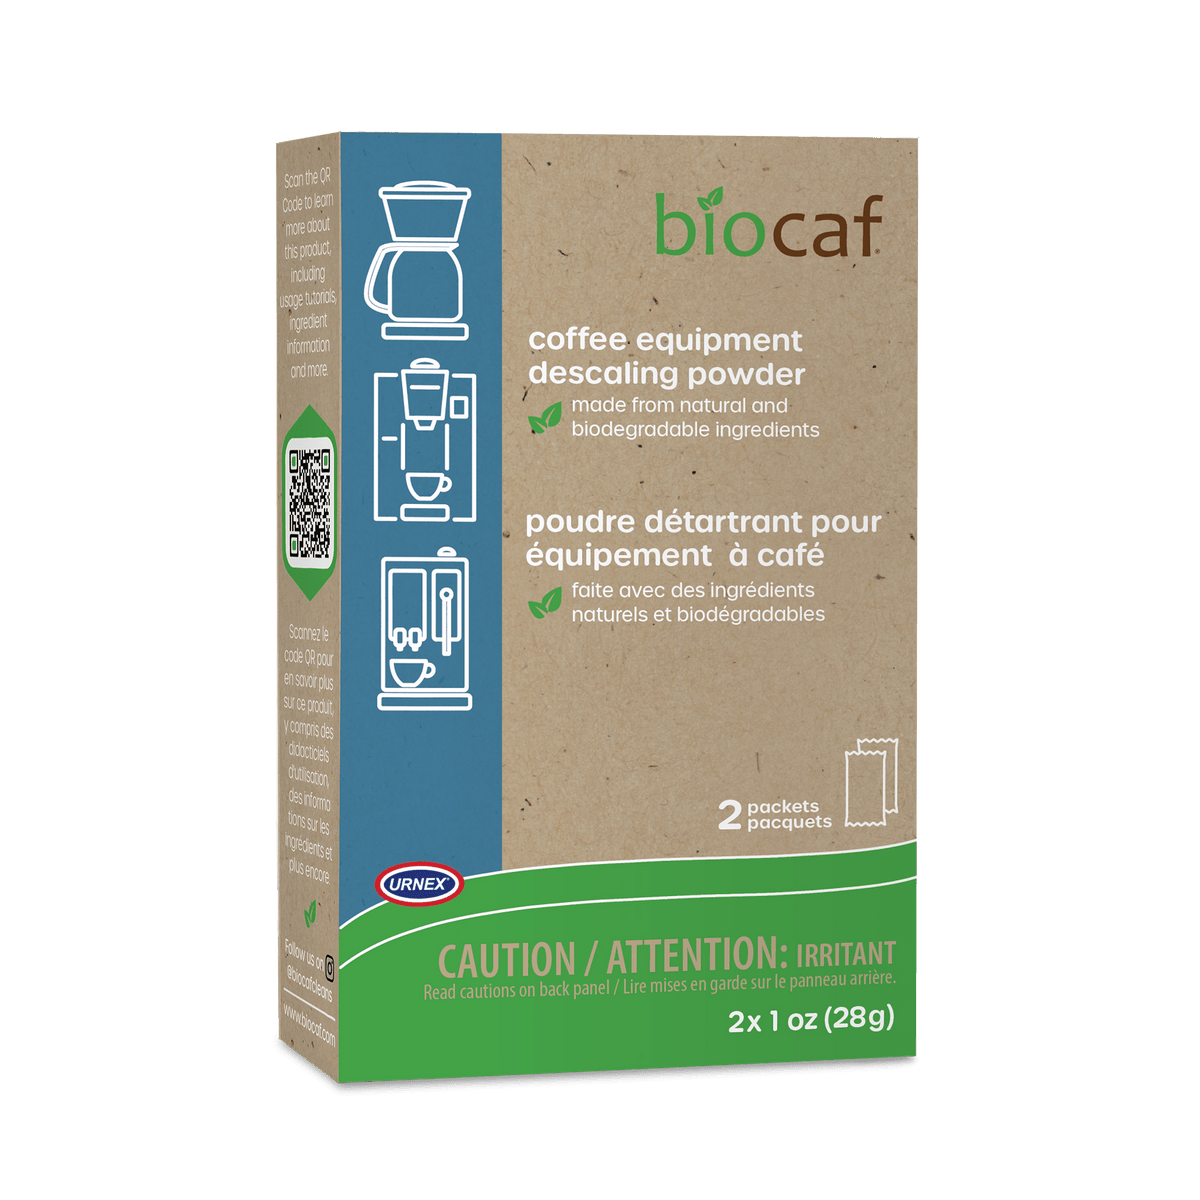 A box of Biocaf Coffee Equipment Descaling Powder.